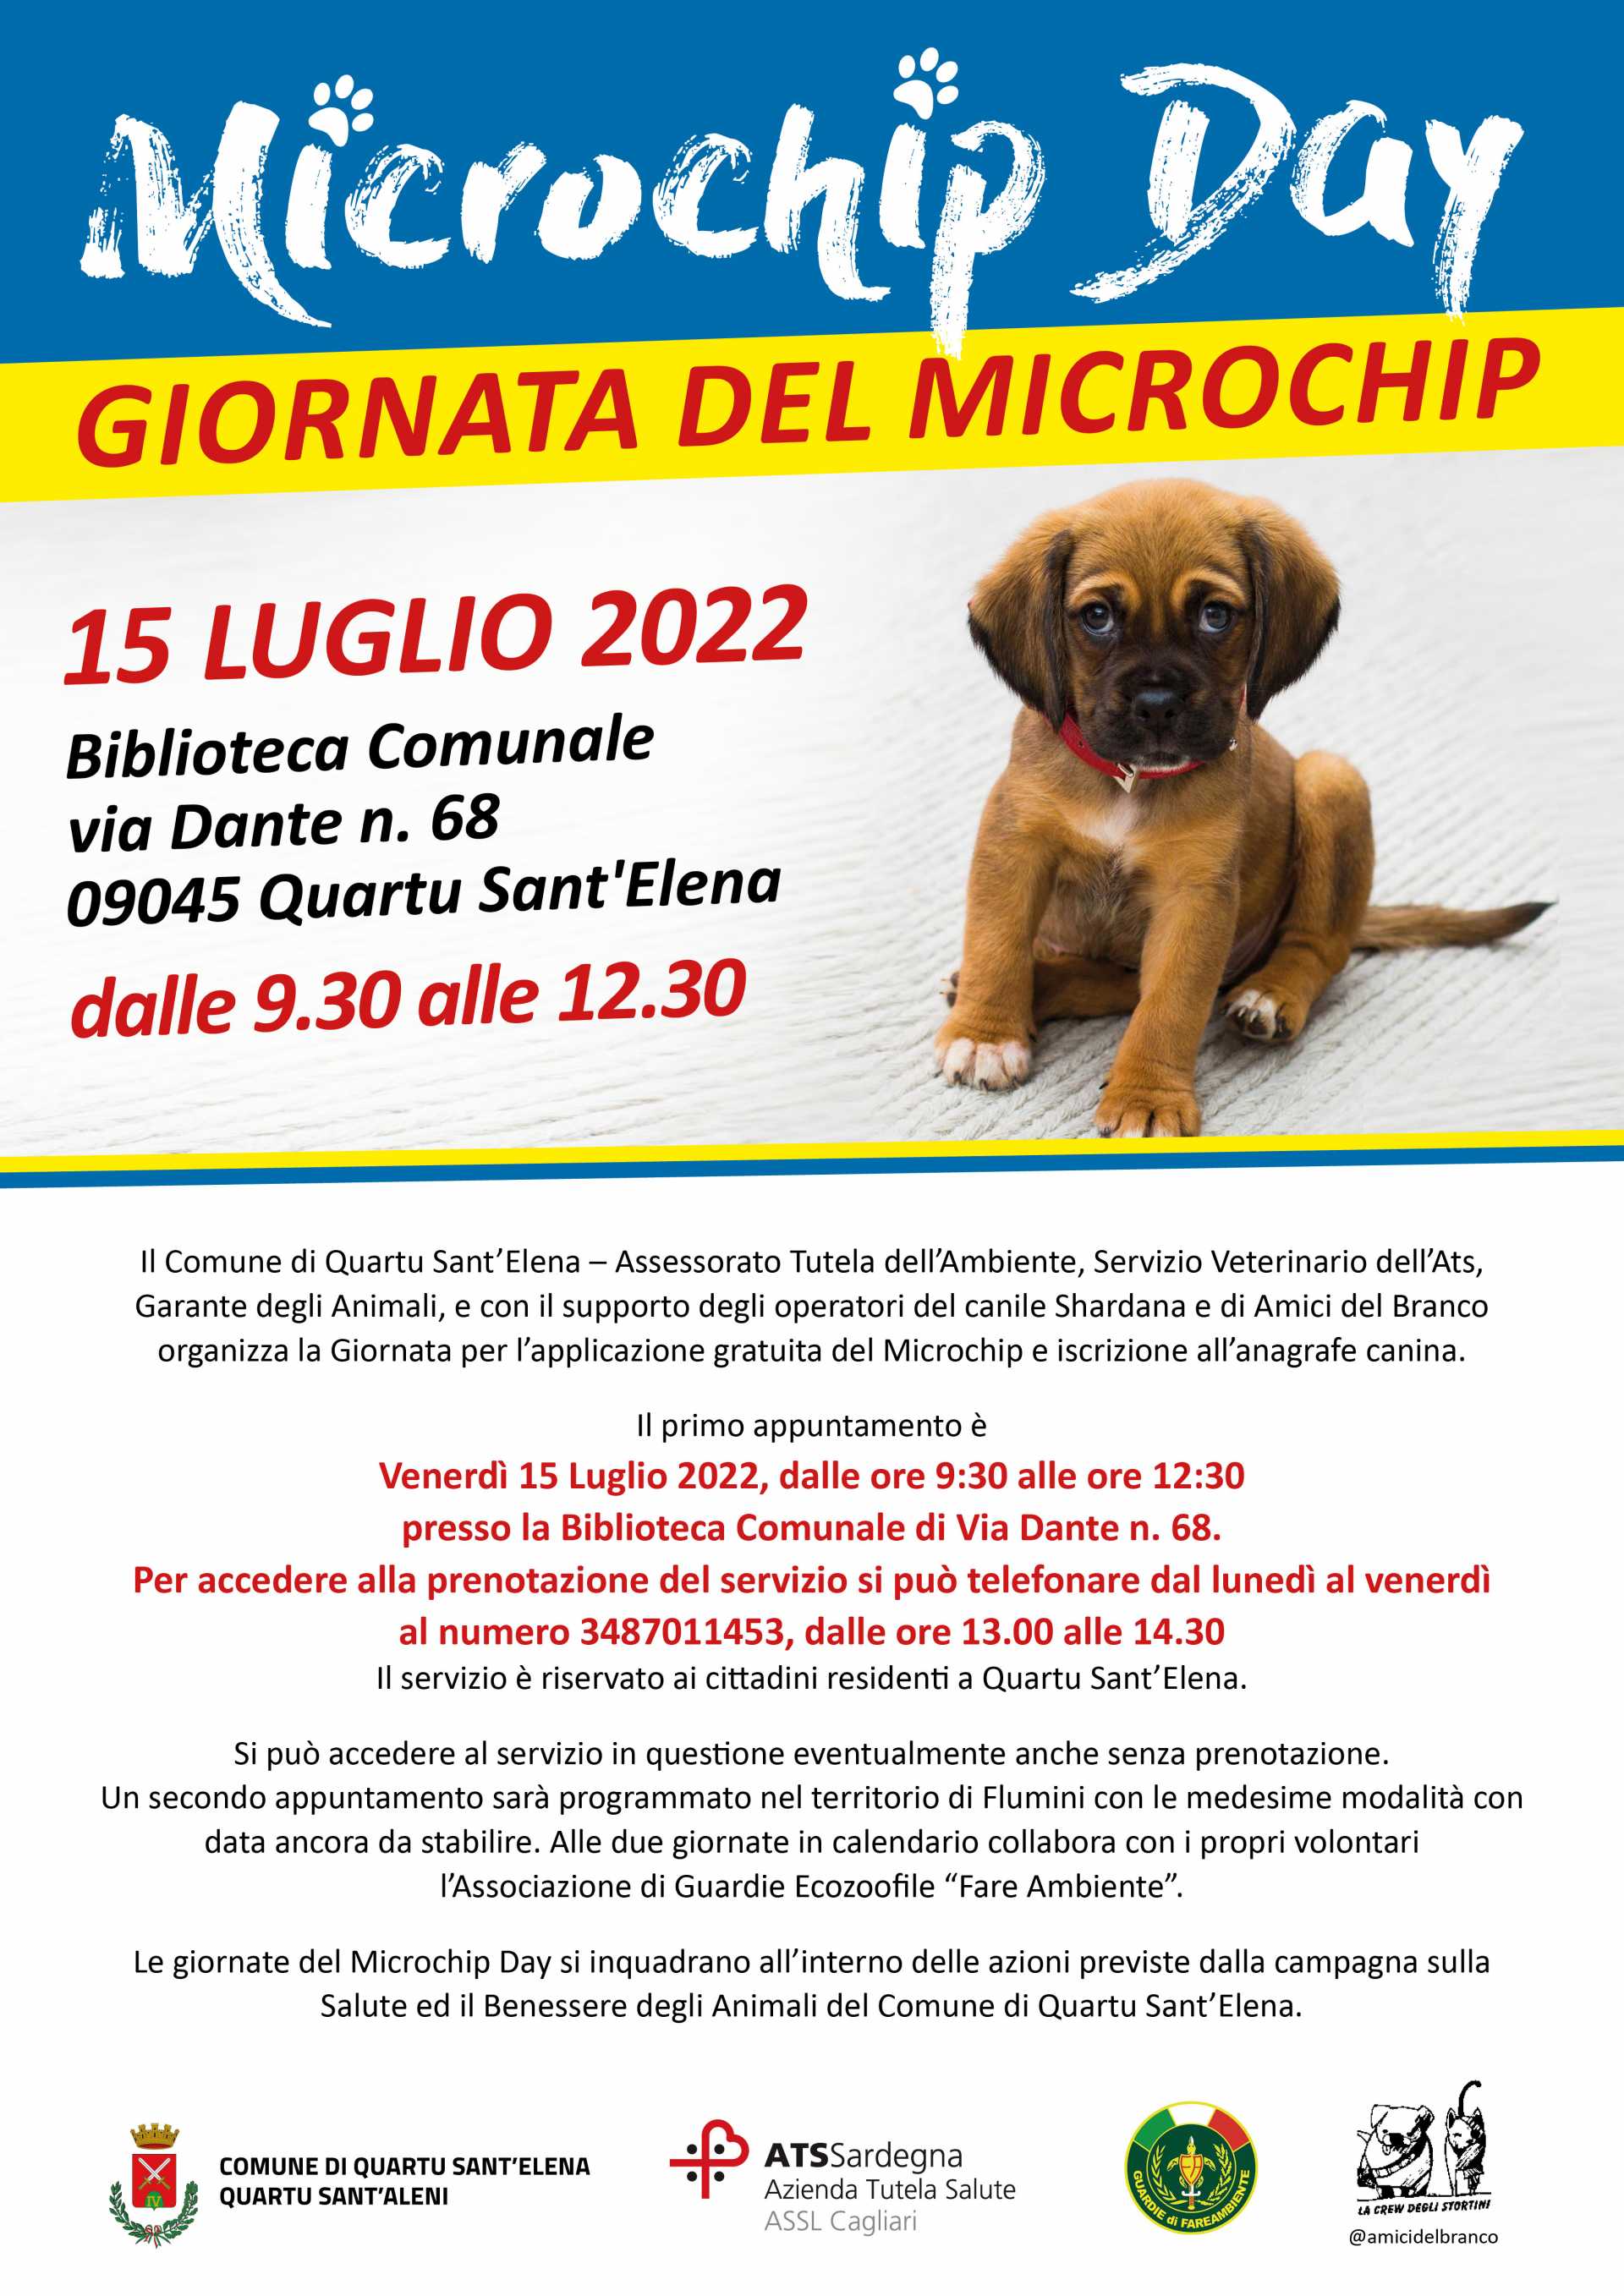 microchip day cani 2022